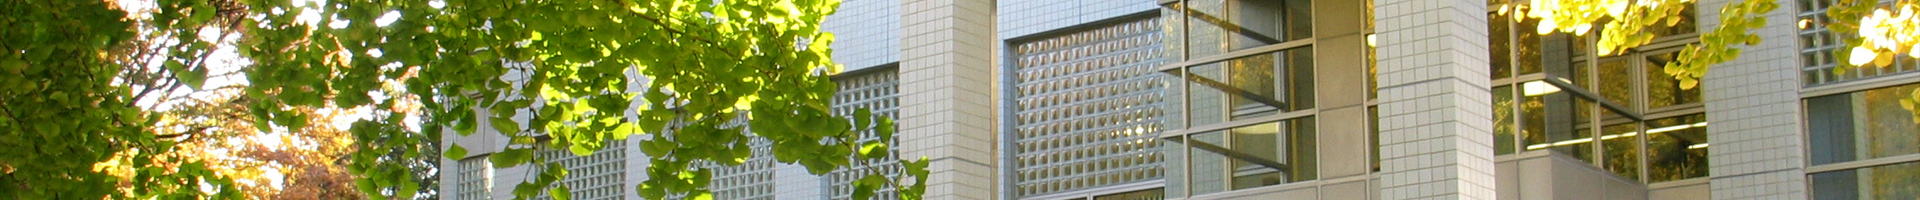 Hiyoshi Media Center Hiyoshi Library